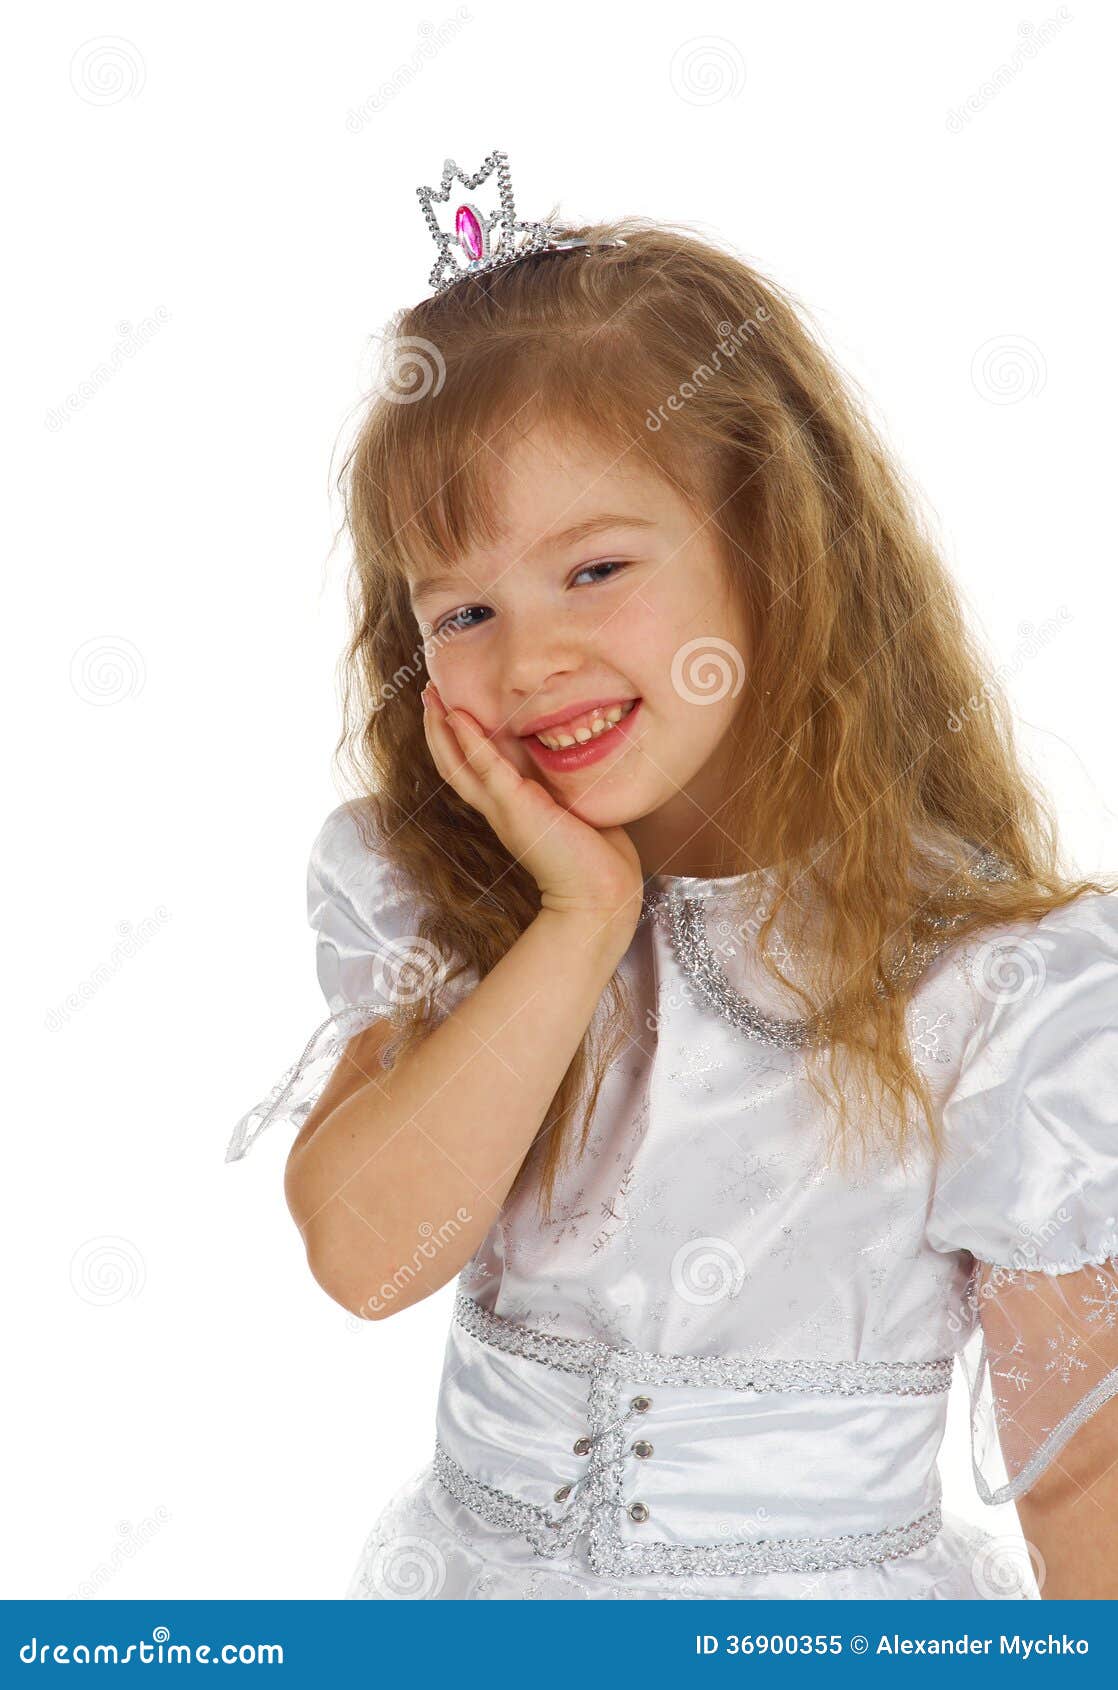 Little Girl Dressed As Princess Stock Image - Image of celebration ...